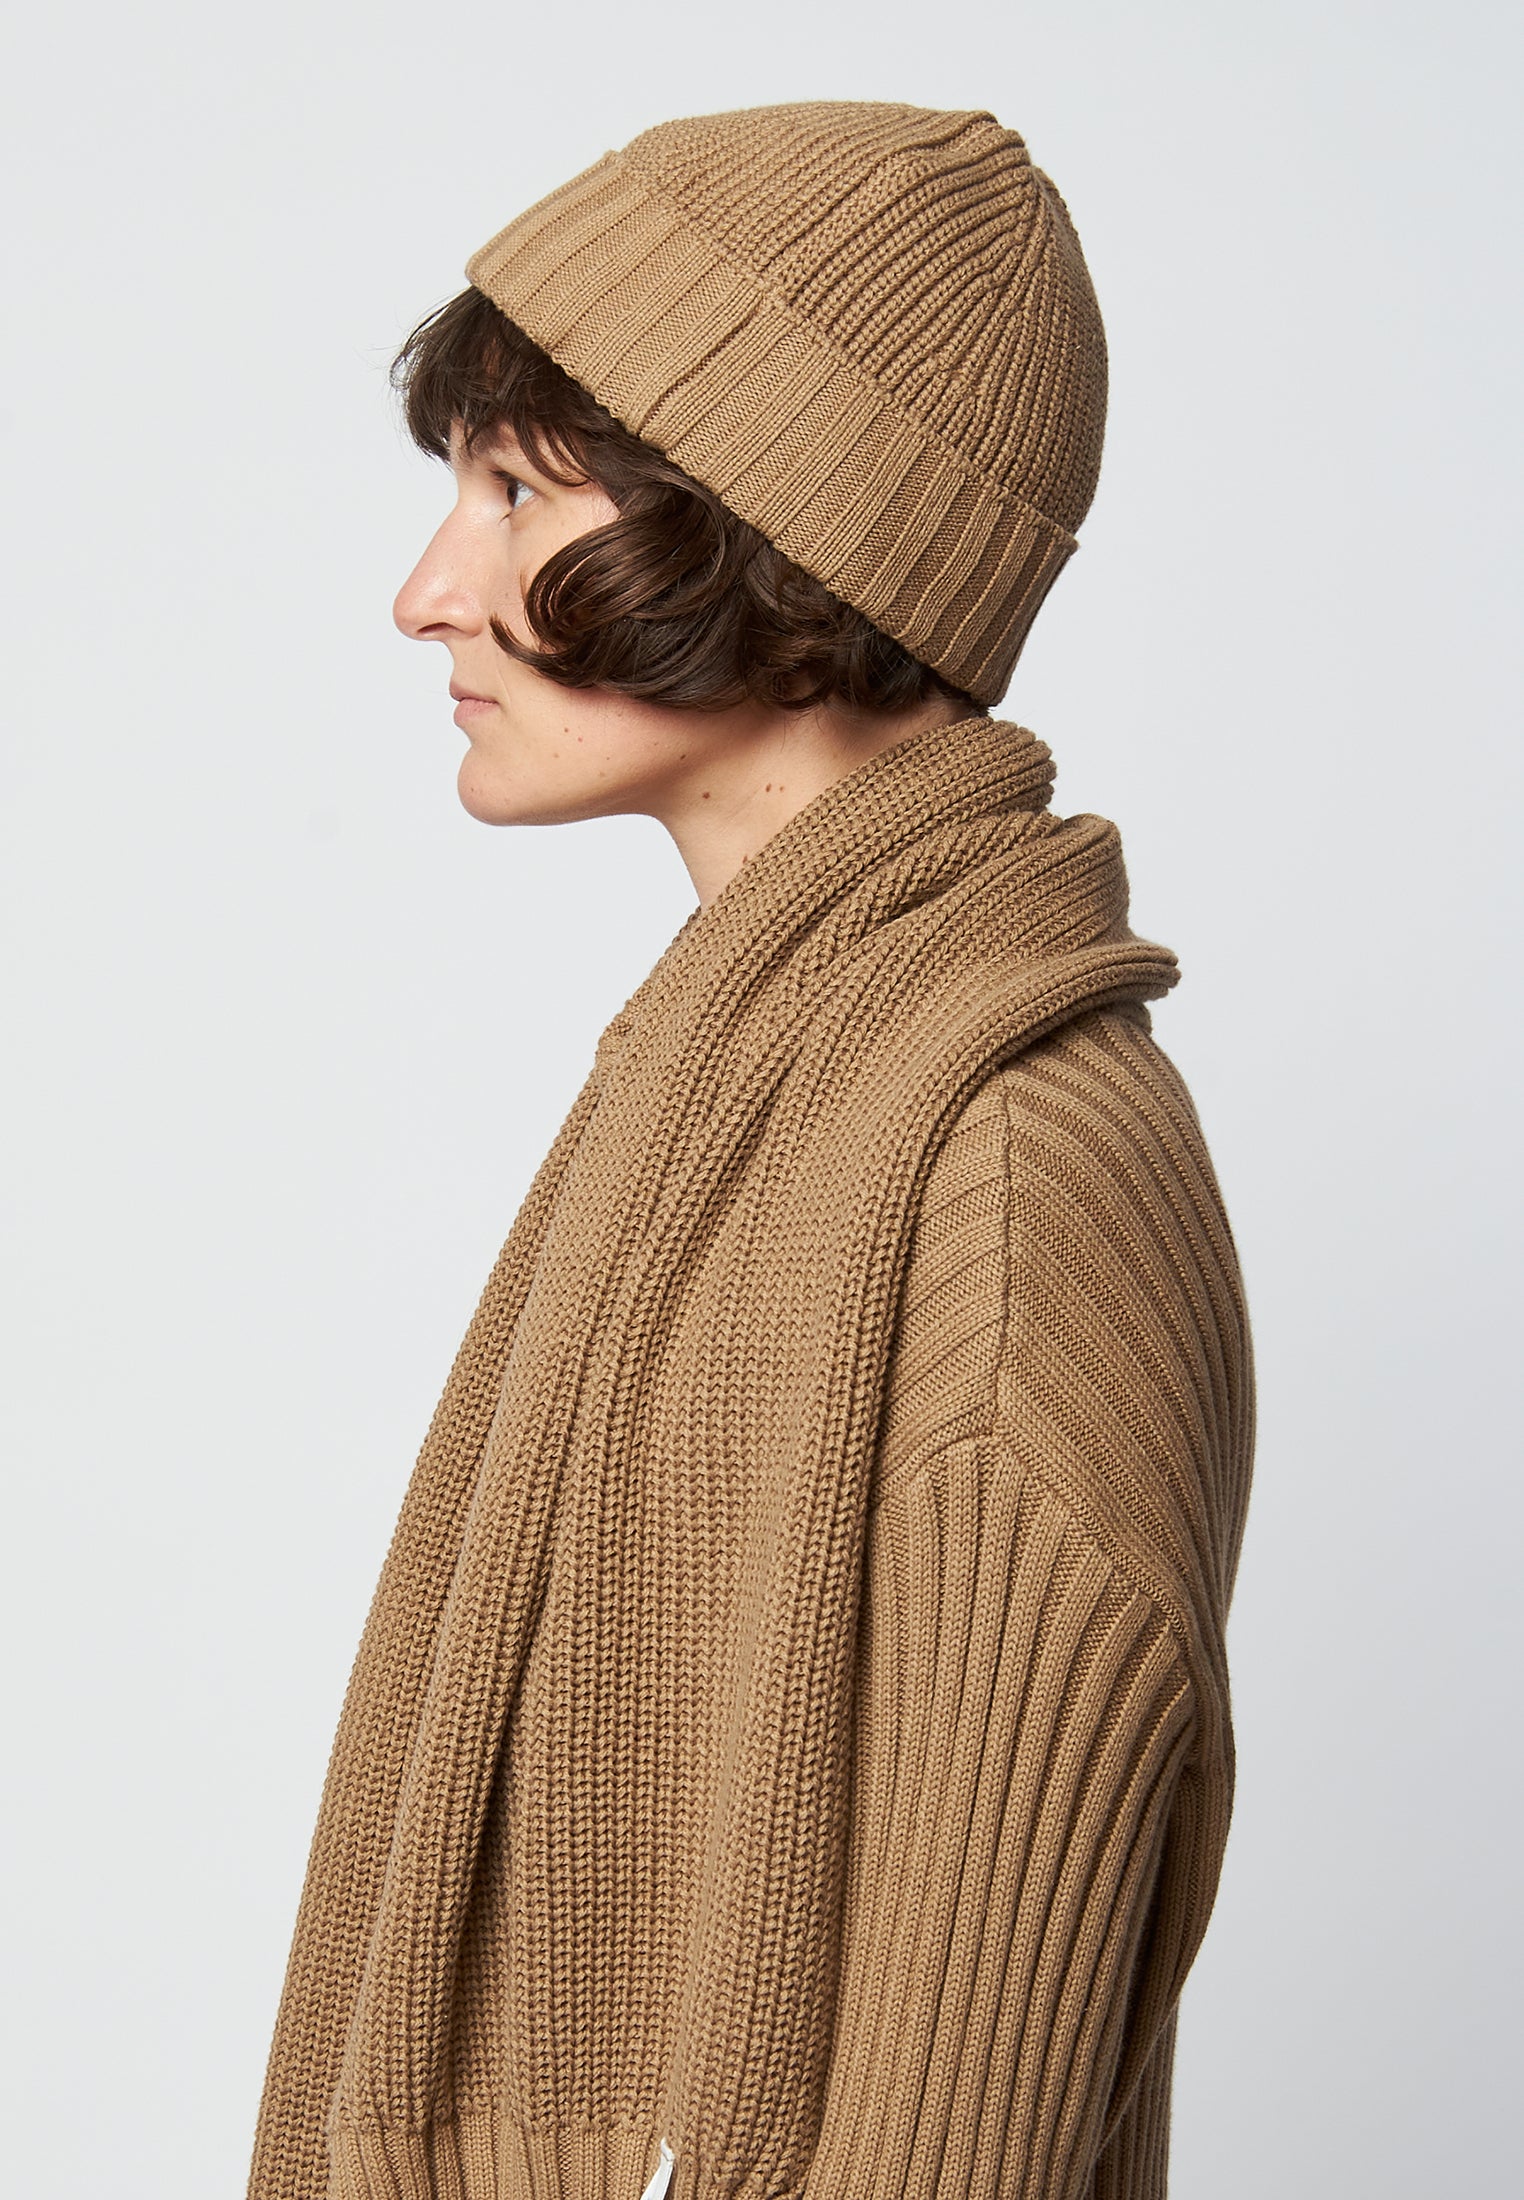 Organic cotton knit hat MORA in brown